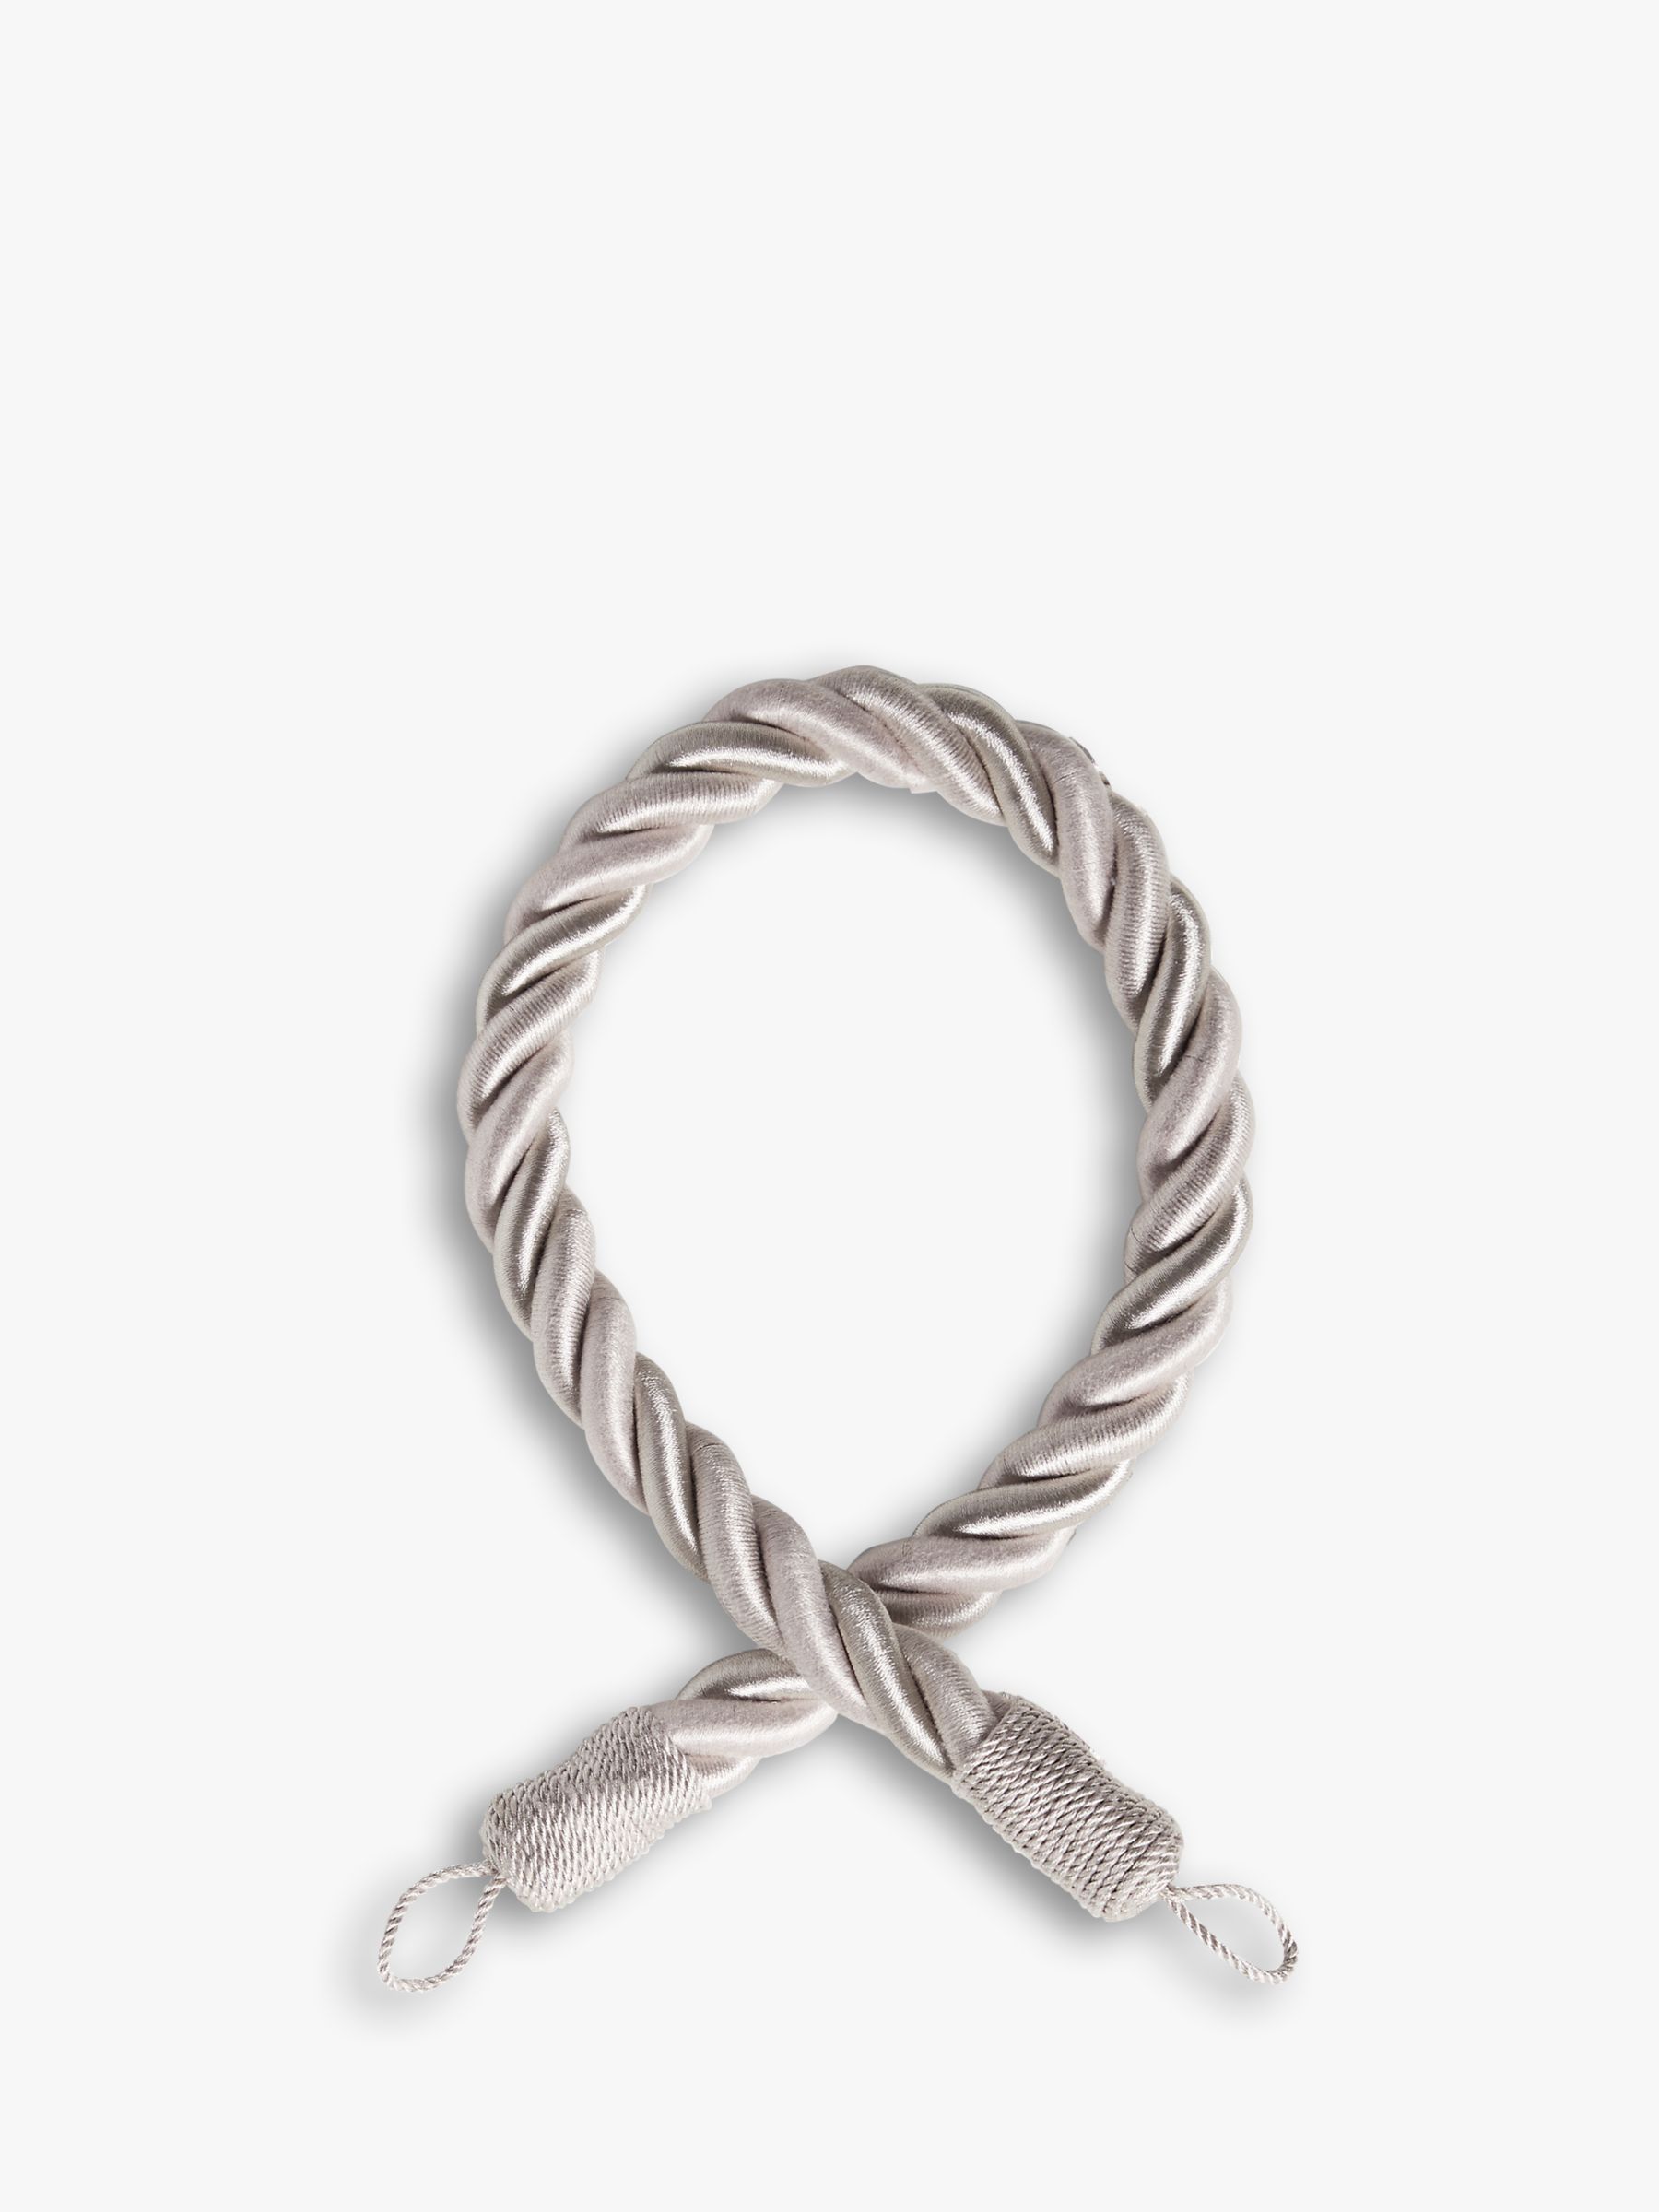 single rope John Lewis Curtain-Rope Tie Back BNIP L80cm 3 Tone Silver Grey 